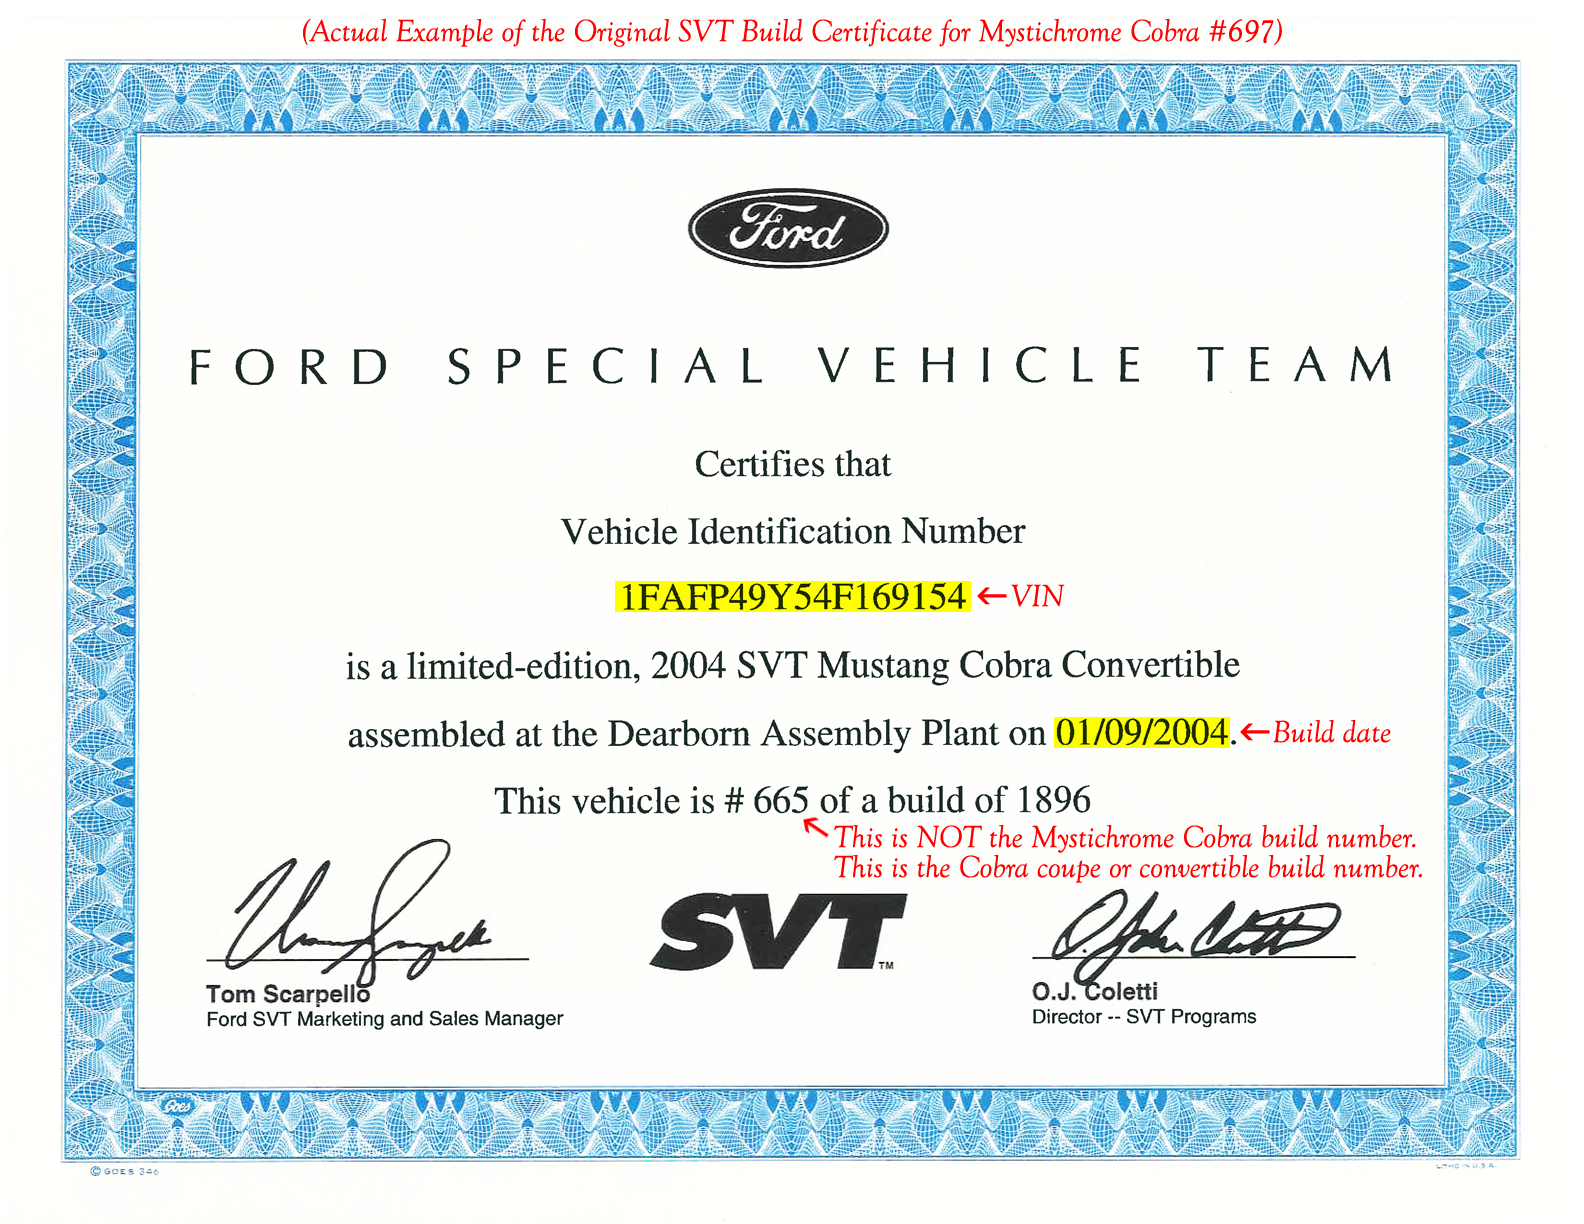 SVT Build Certificate